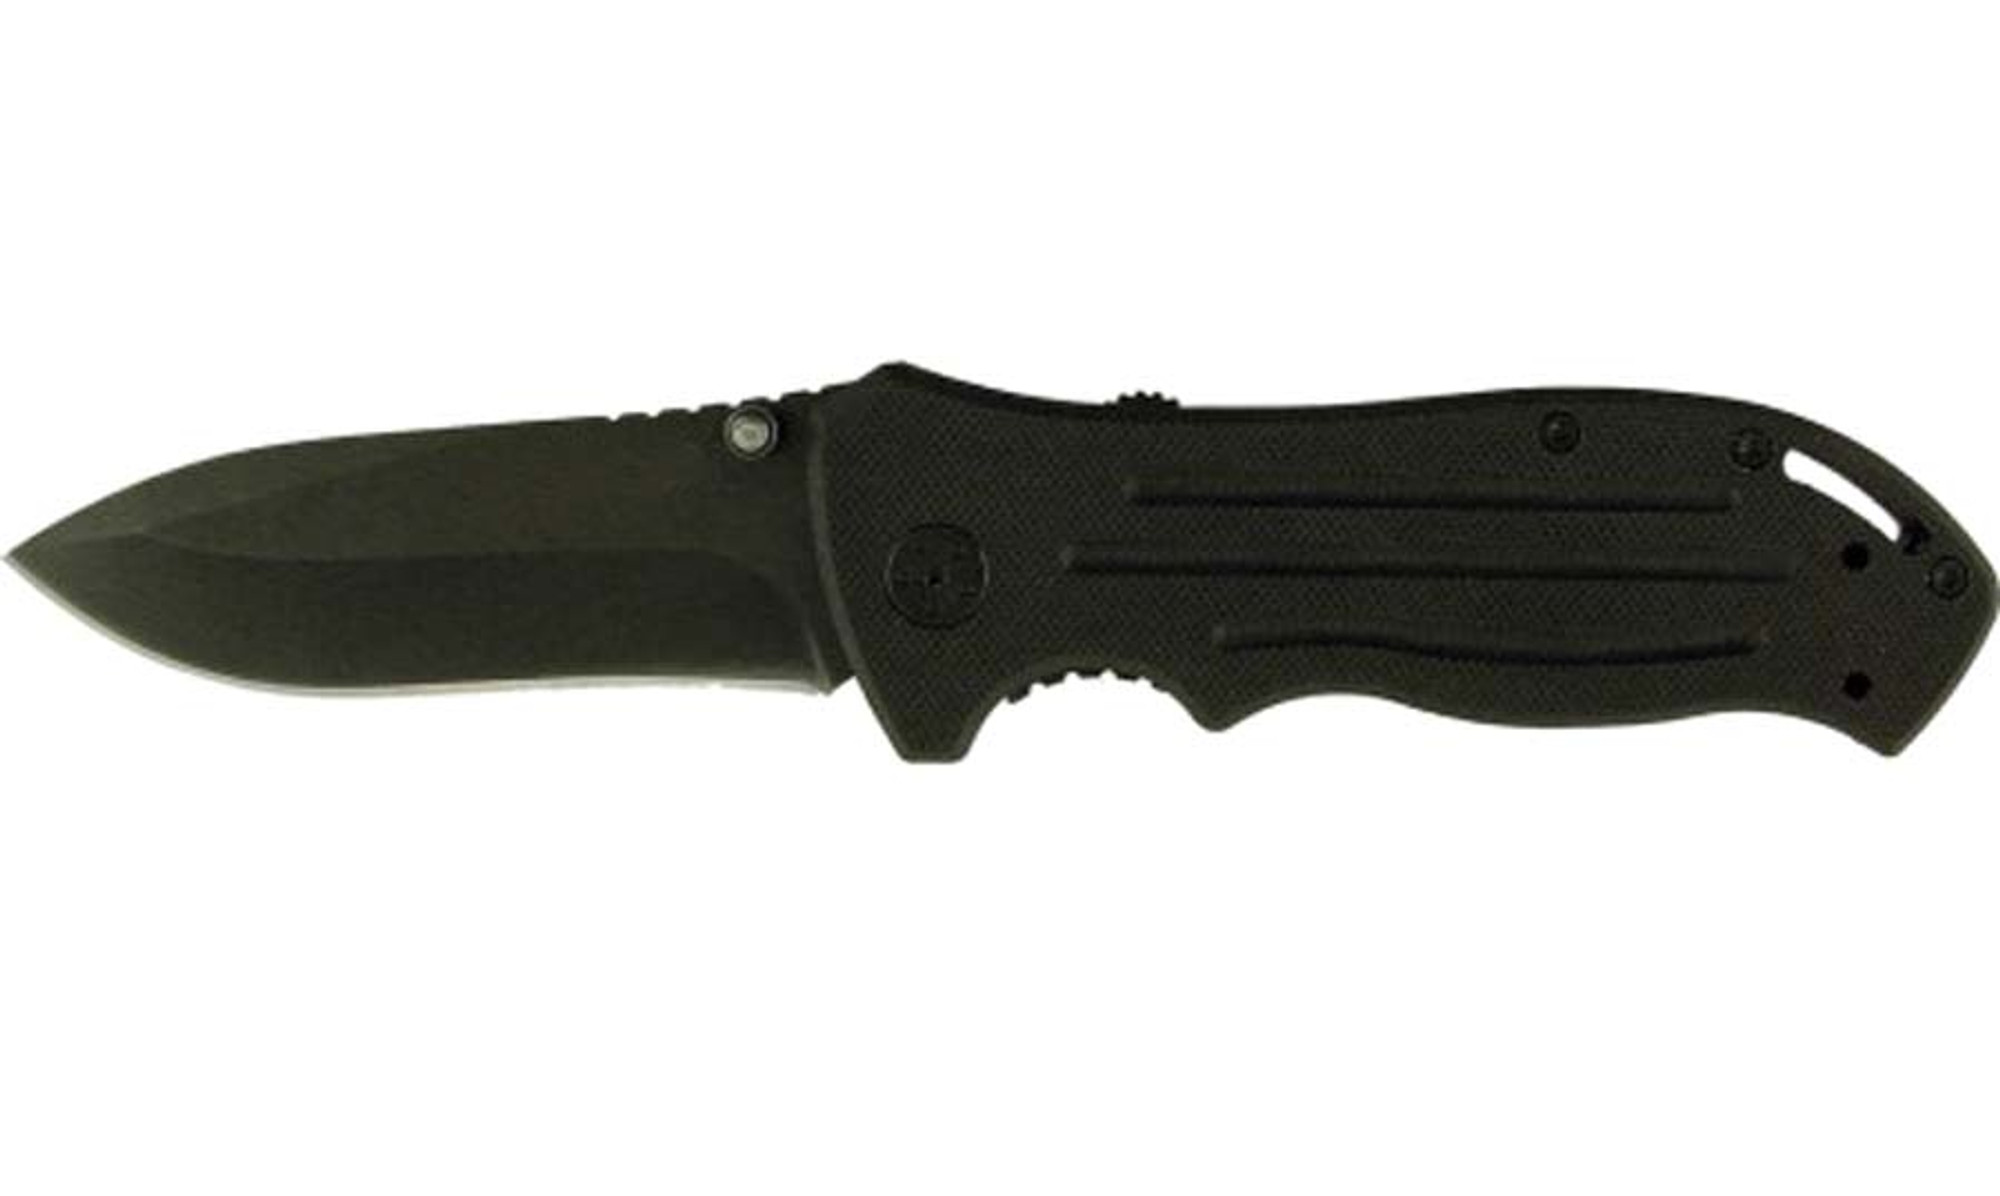 RUKO RUK0145A, 440A, 3-3/8" Folding Blade Asssited Open Knife, G10 Handle, boxed